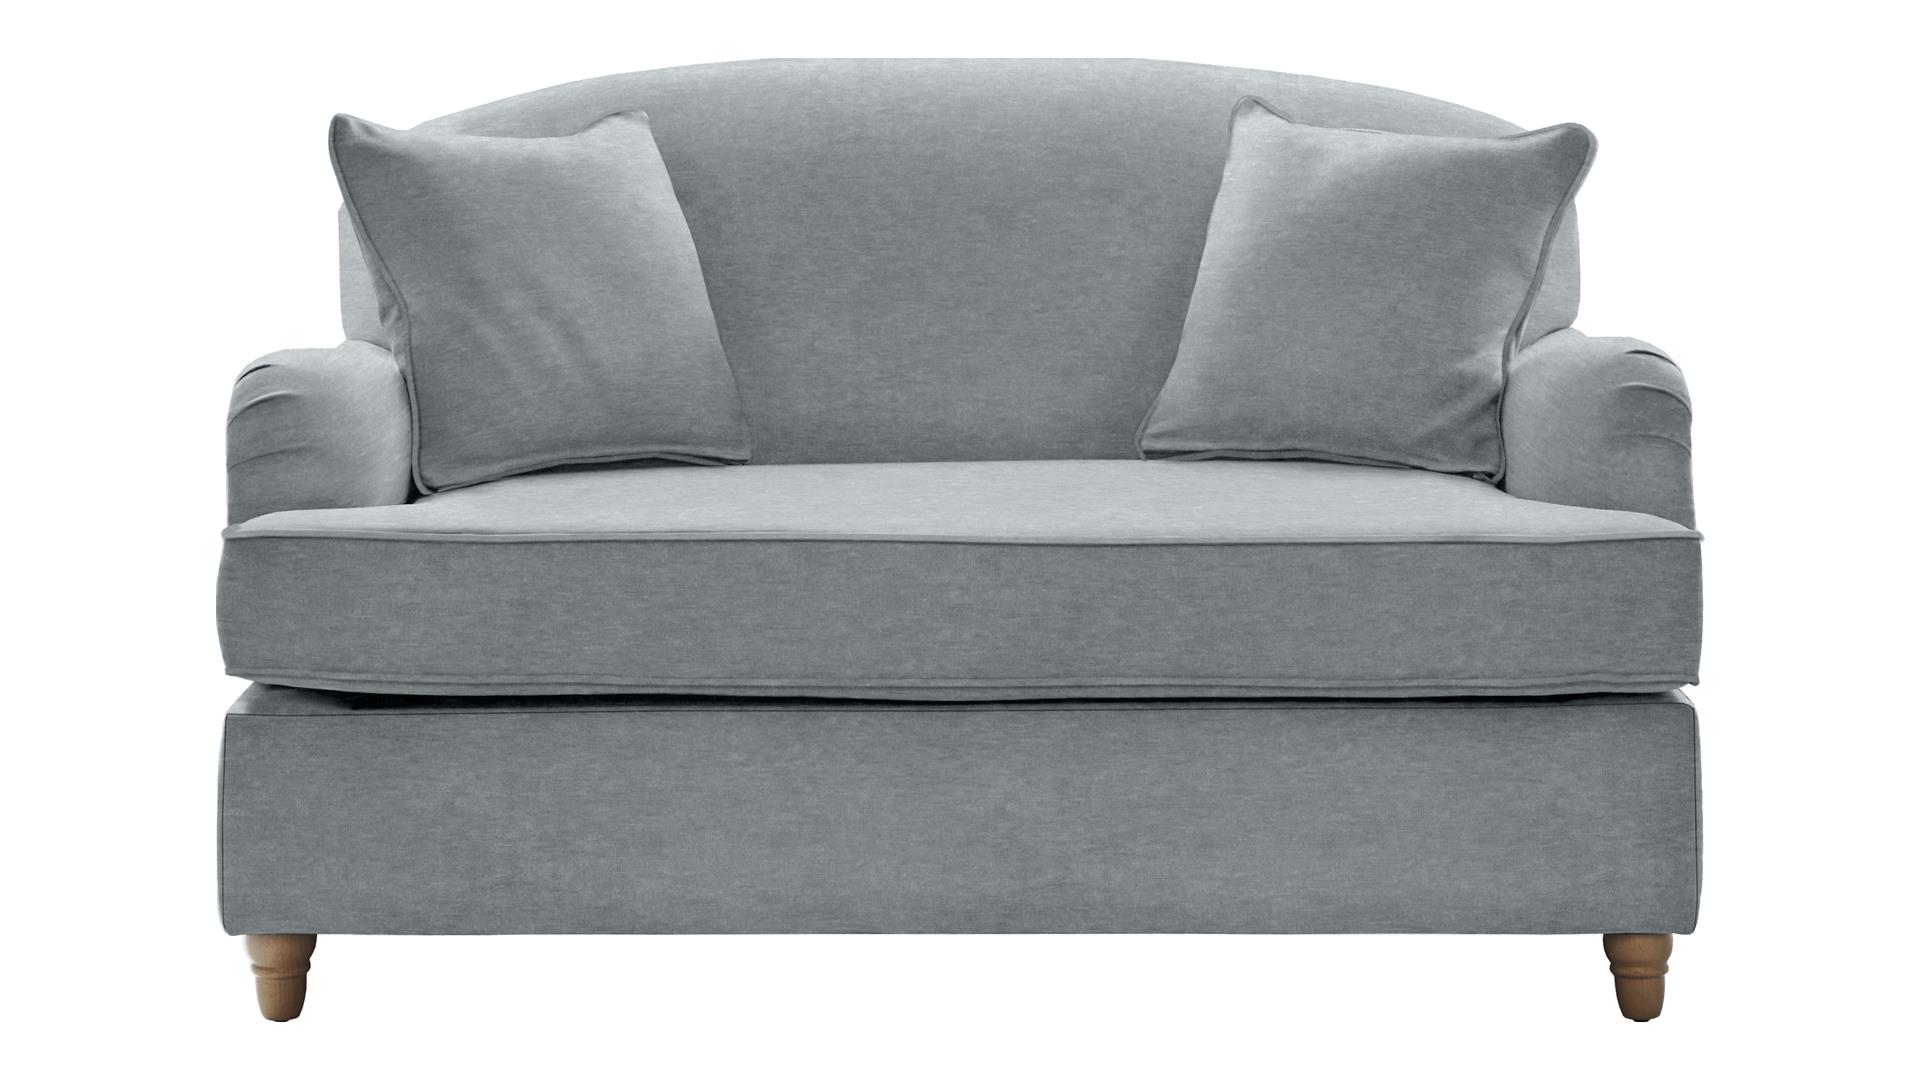 The Appledoe Love Seat Sofa